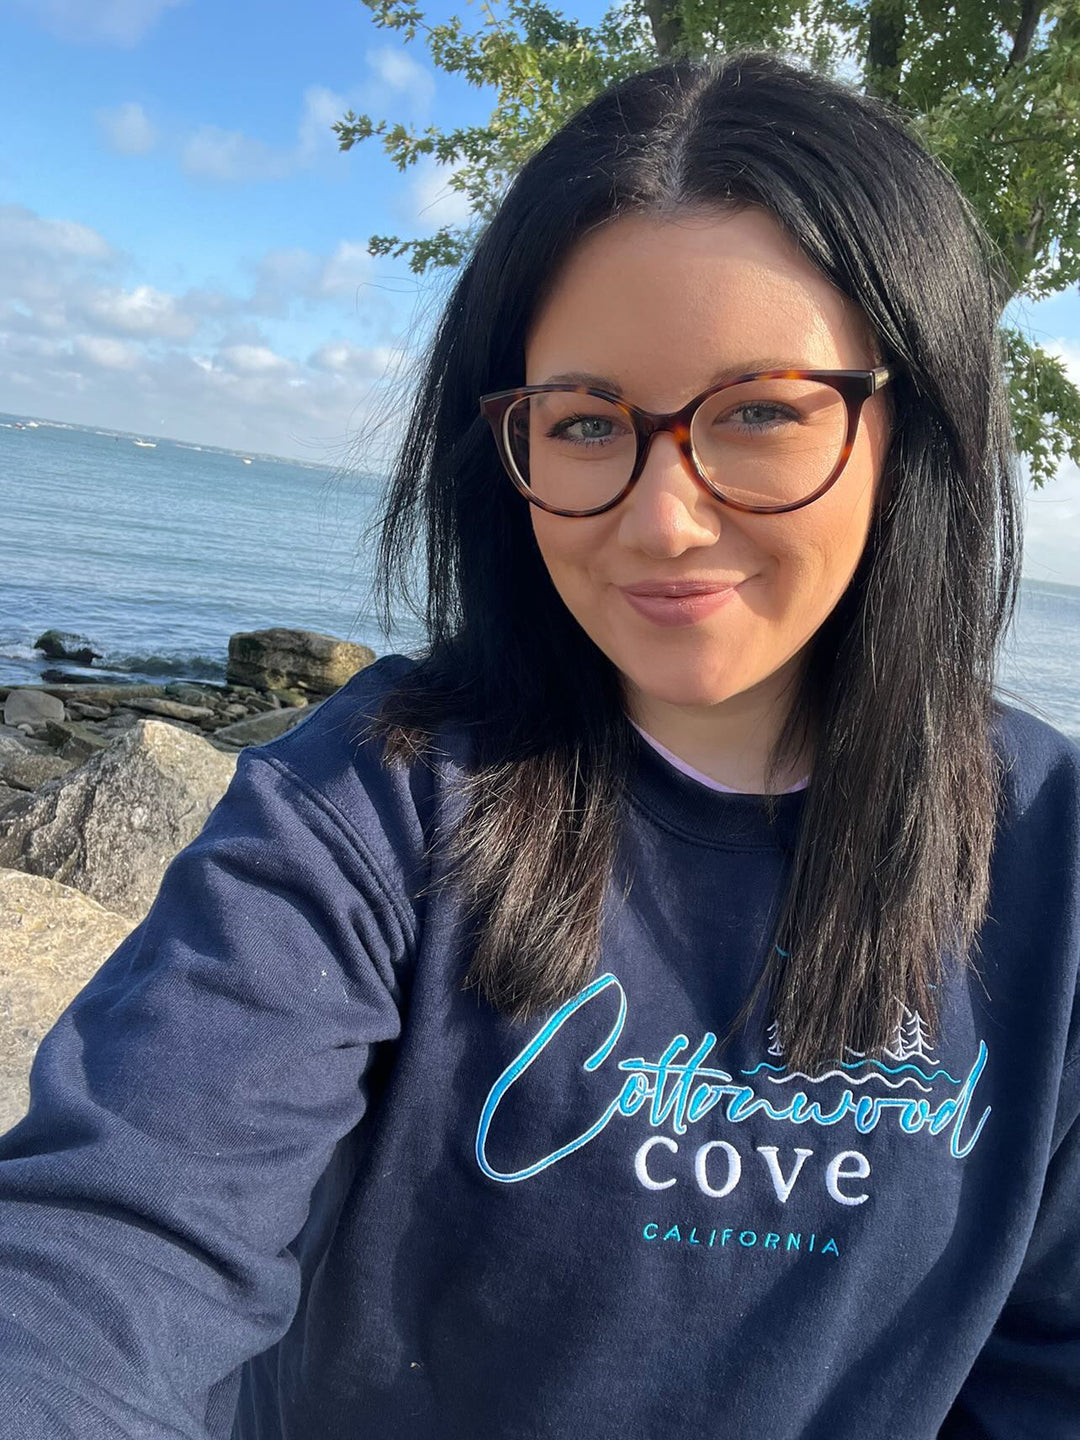 Laura Pavlov- Cottonwood Cove Embroidered Unisex Sweatshirt